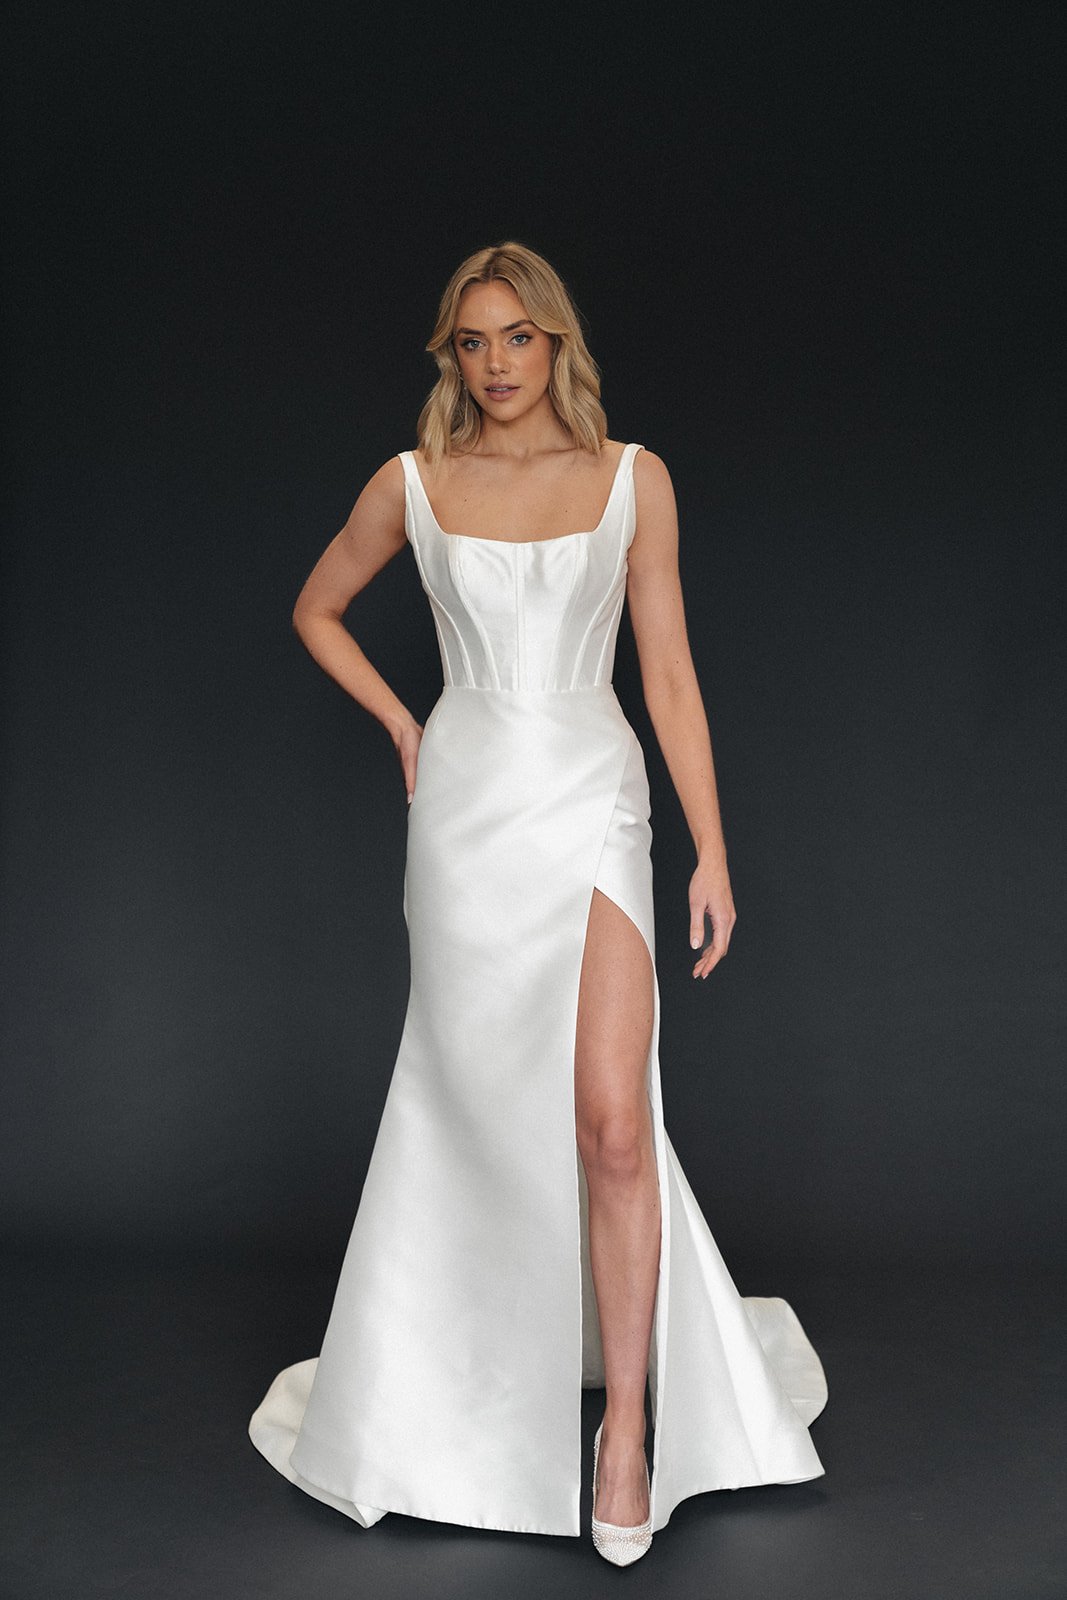 Moira Hughes Take Flight Collection Catalina Mikado Wedding Dress with Split.jpg